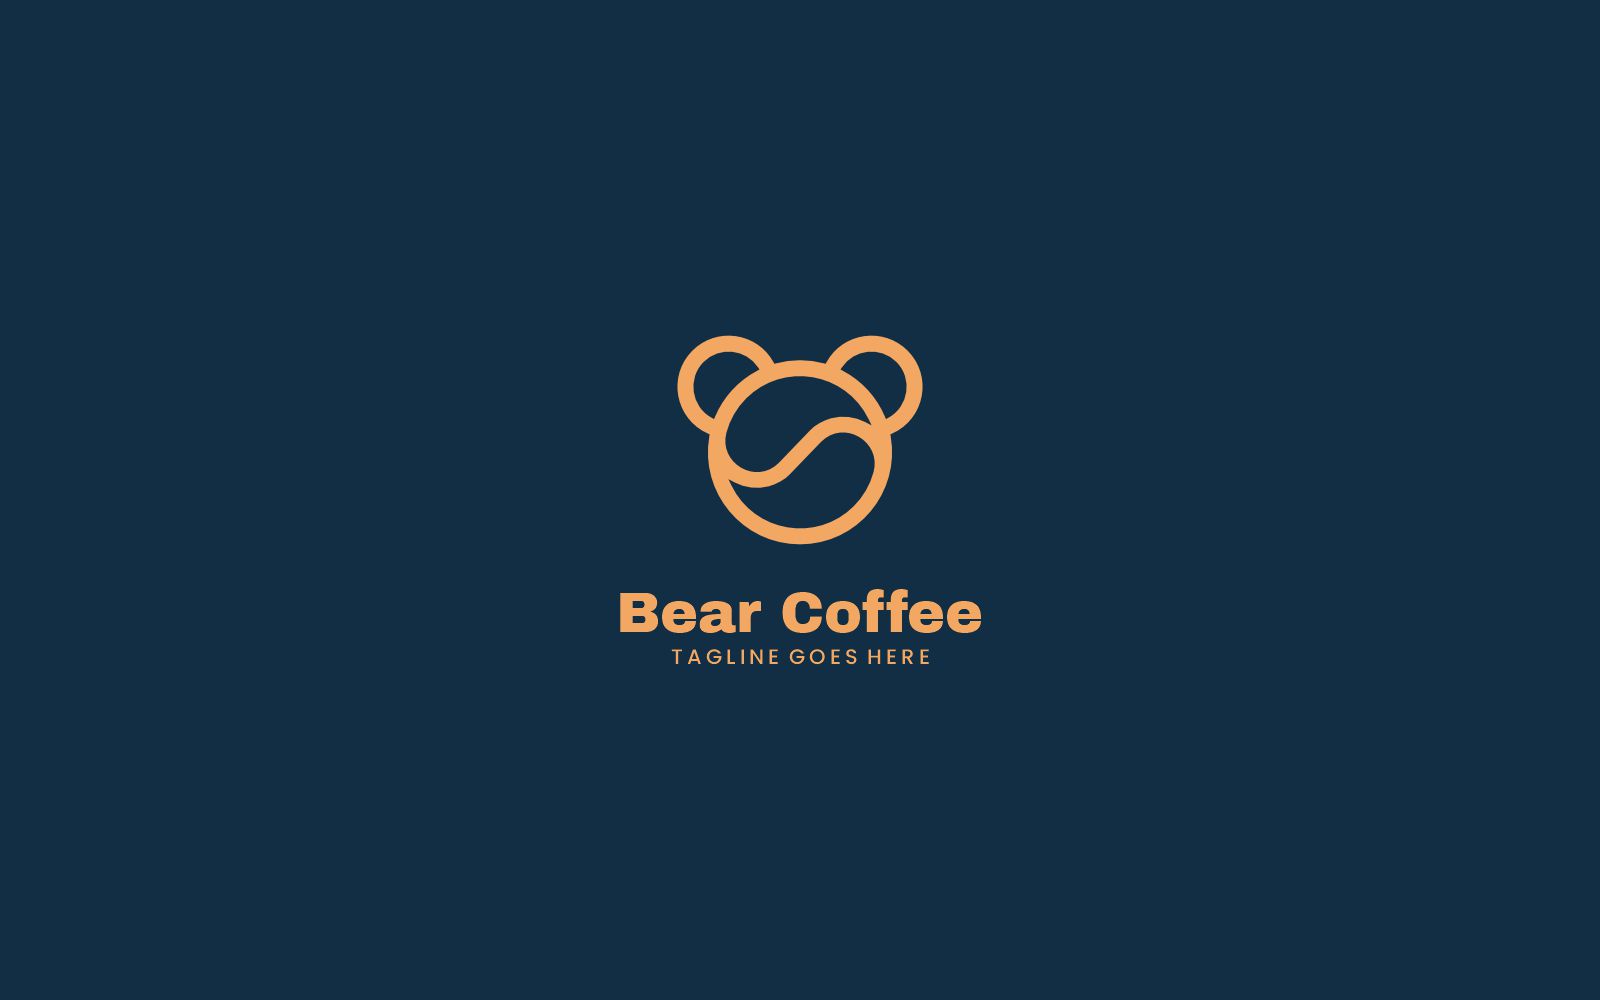 Bear Coffee Line Art Logo